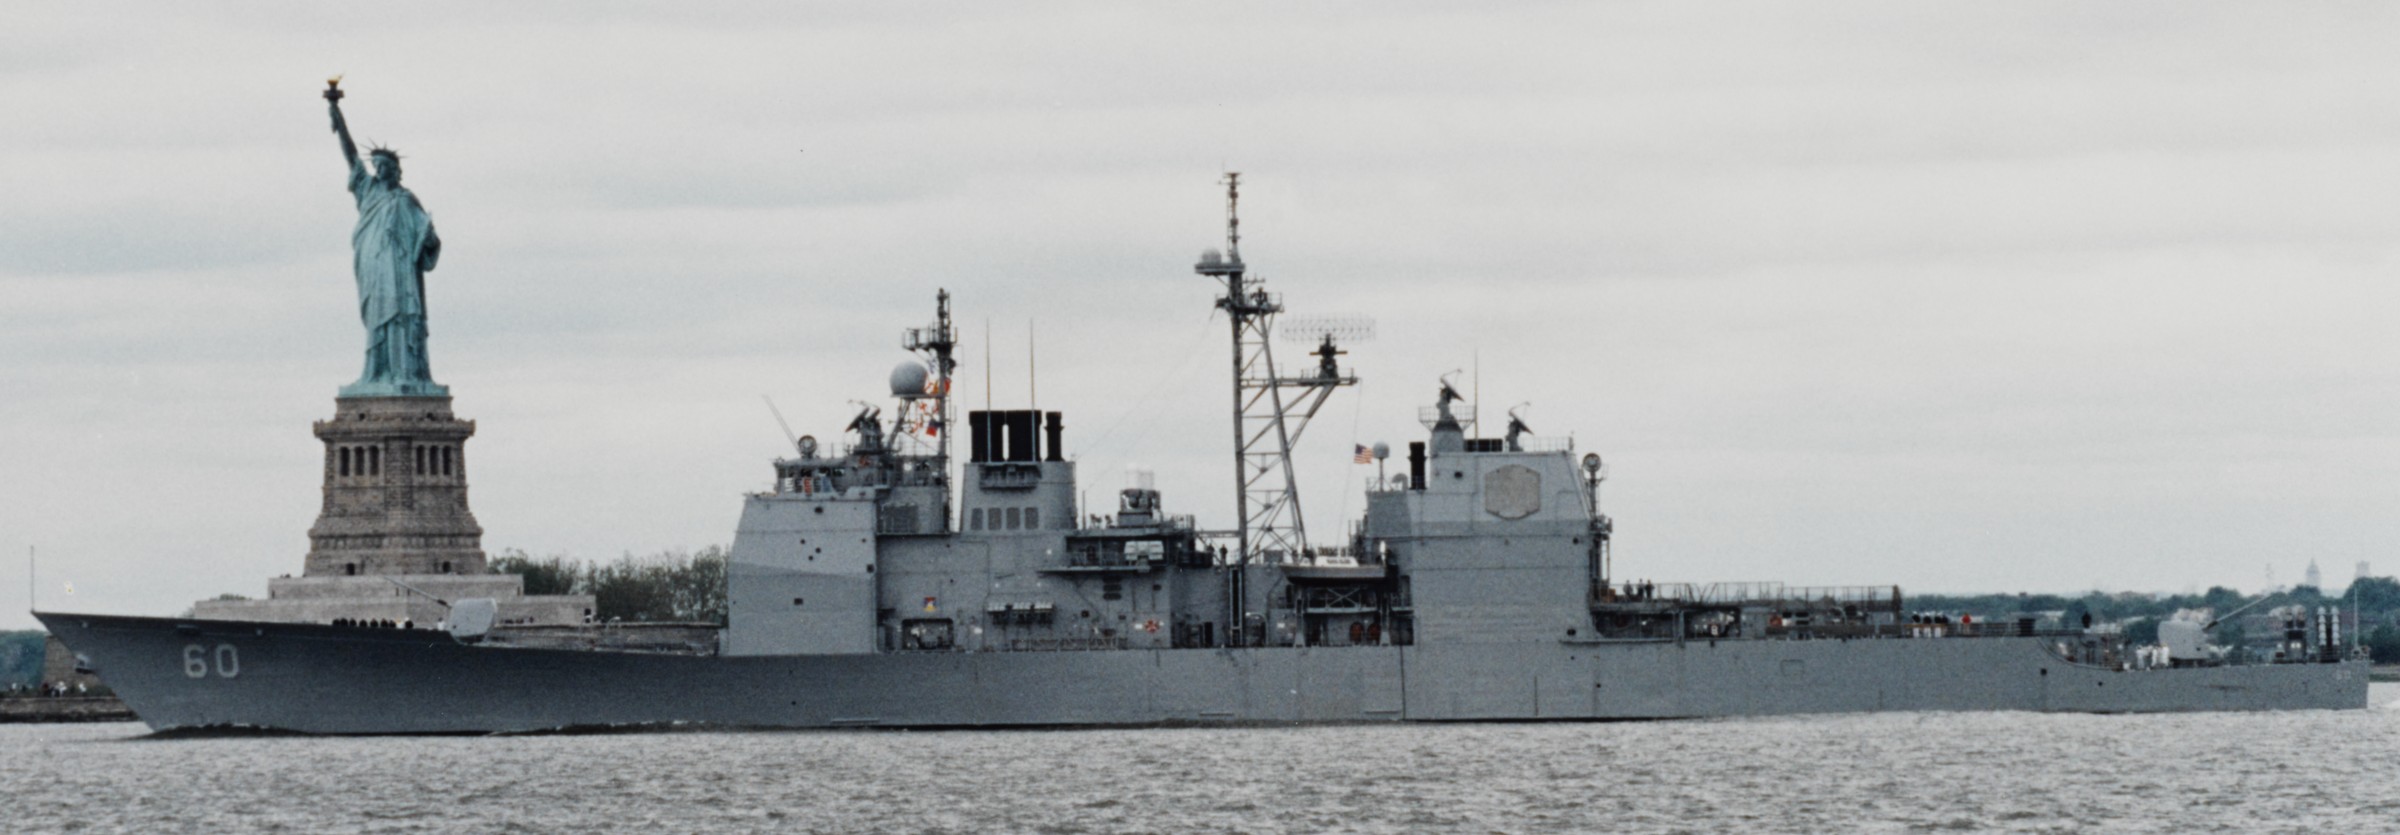 cg-60 uss normandy ticonderoga class guided missile cruiser aegis us navy new york 134